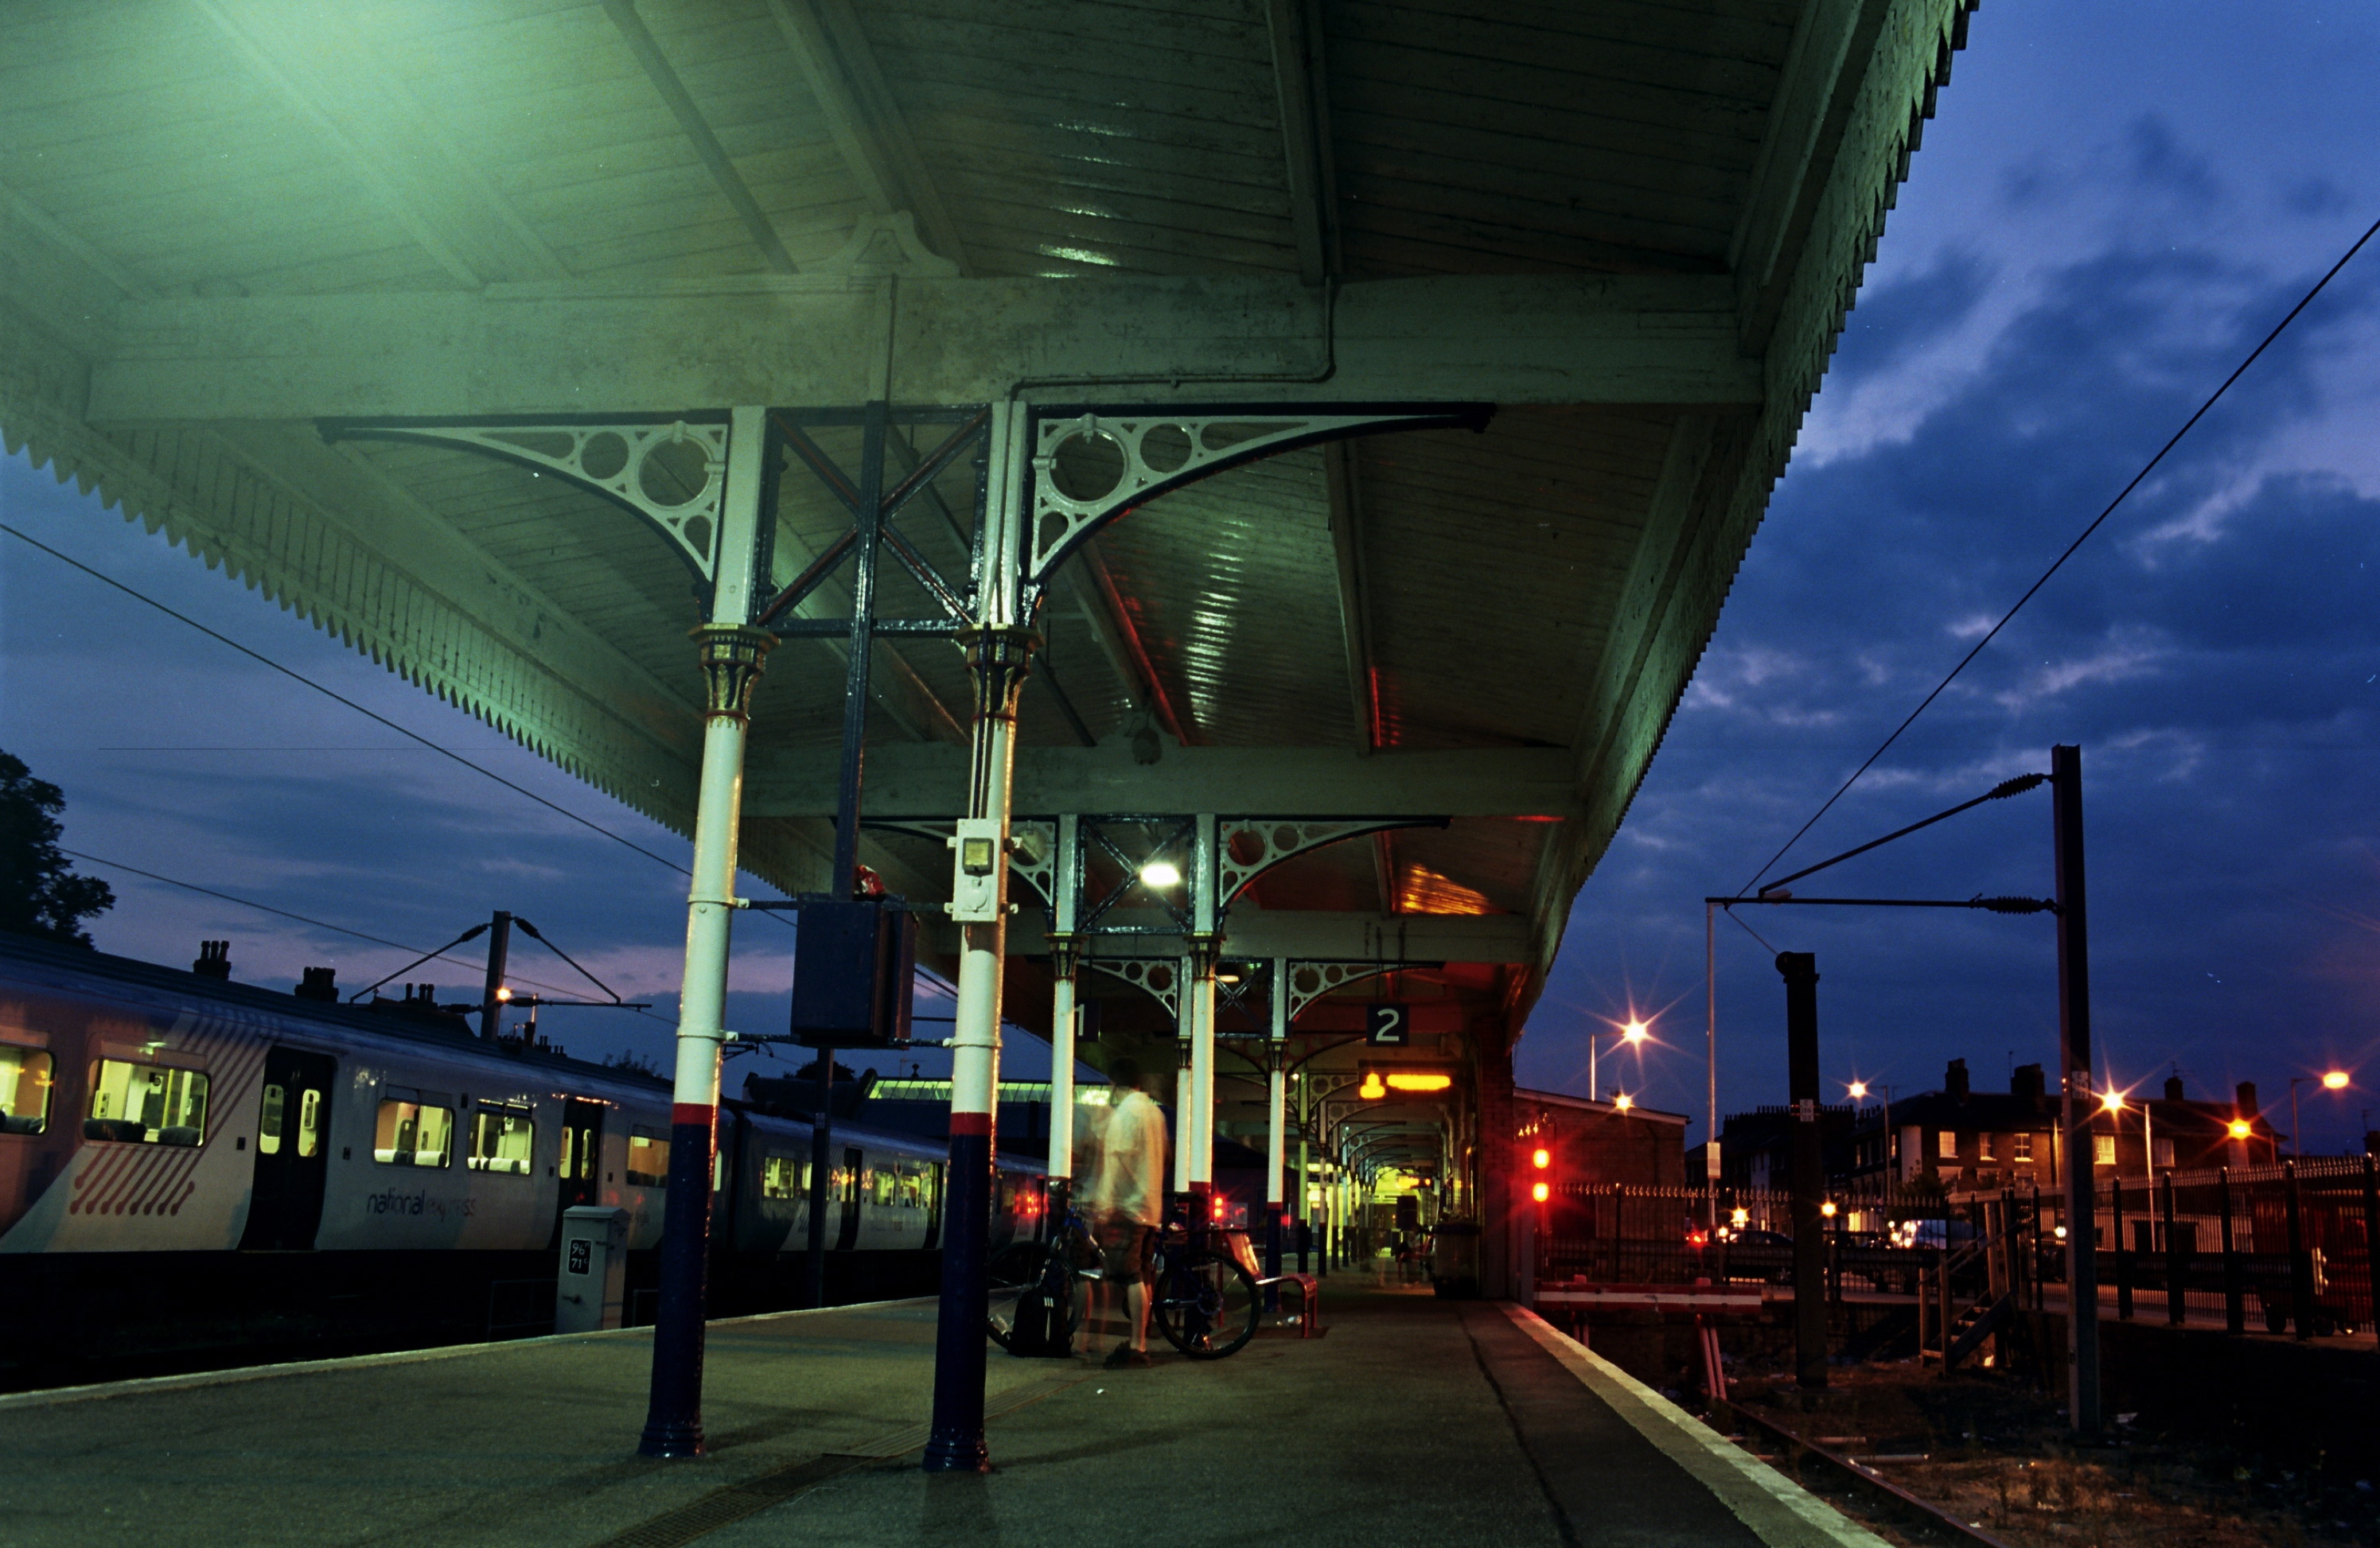 File:King's Lynn railway station in the late evening.jpg - Wikimedia ...